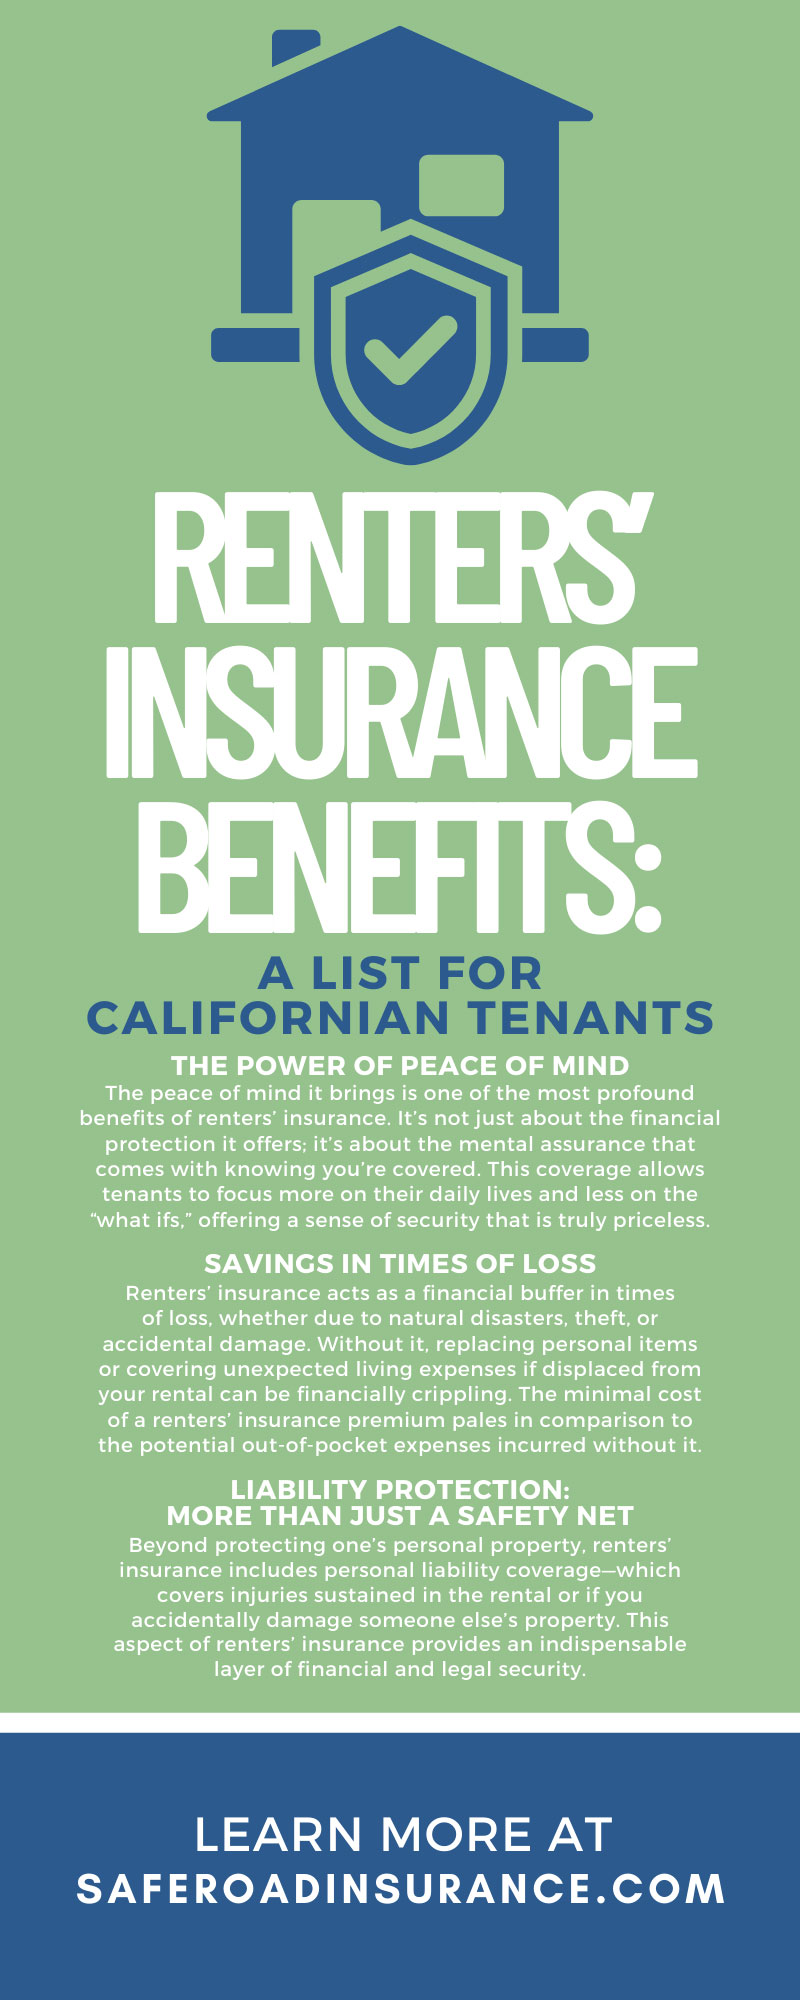 Renters’ Insurance Benefits: A List for Californian Tenants